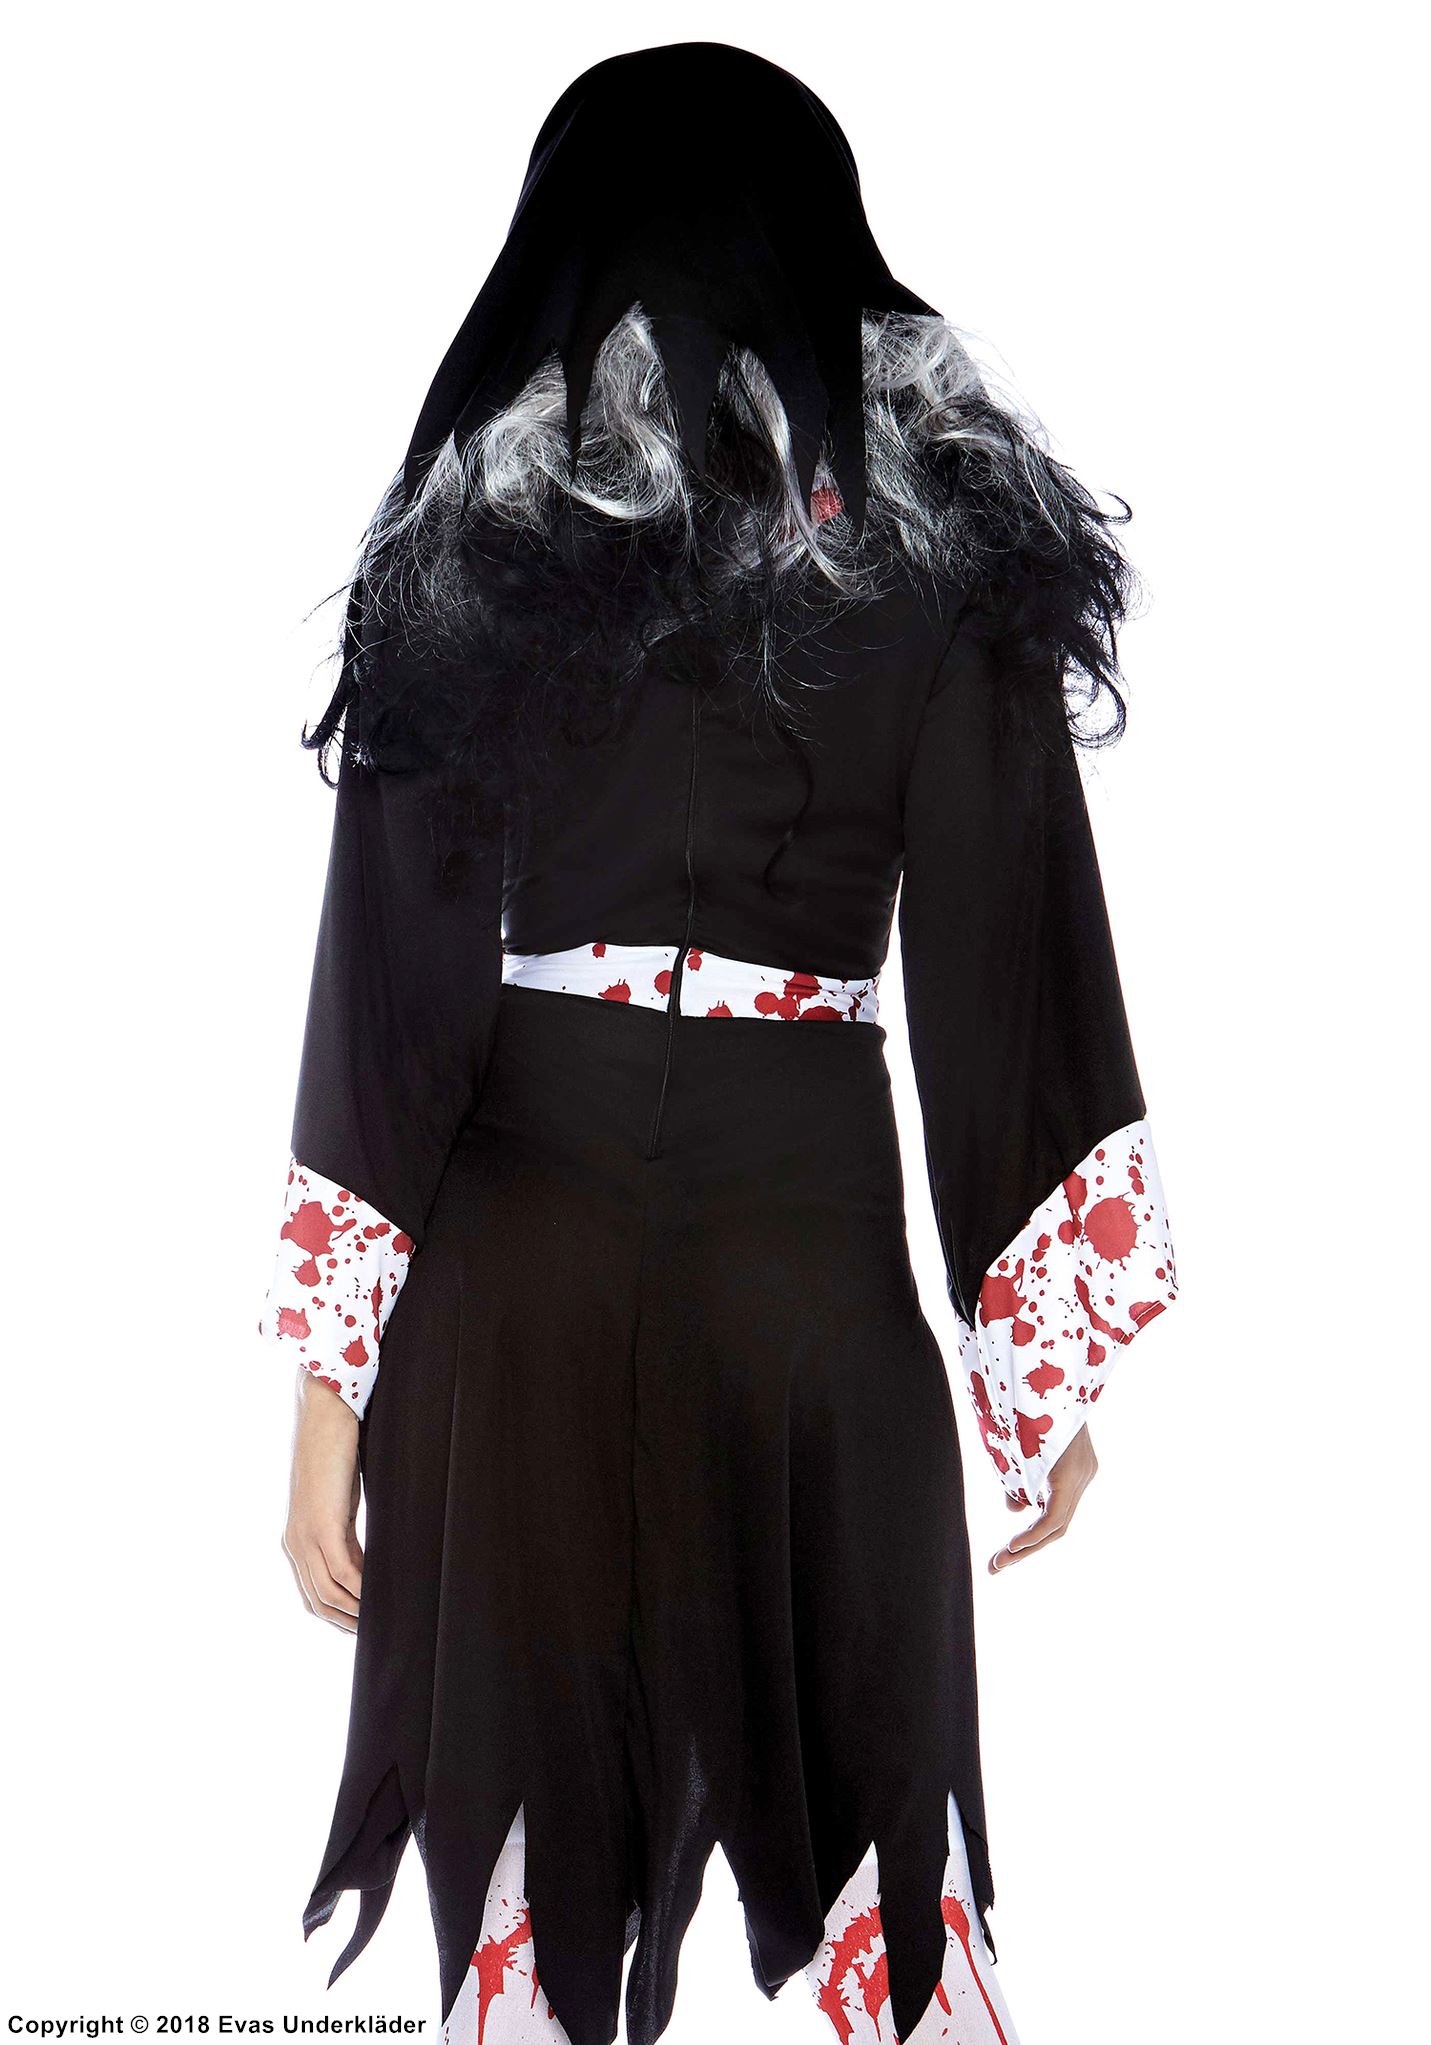 Scary nun, costume dress, tatters, blood splatter